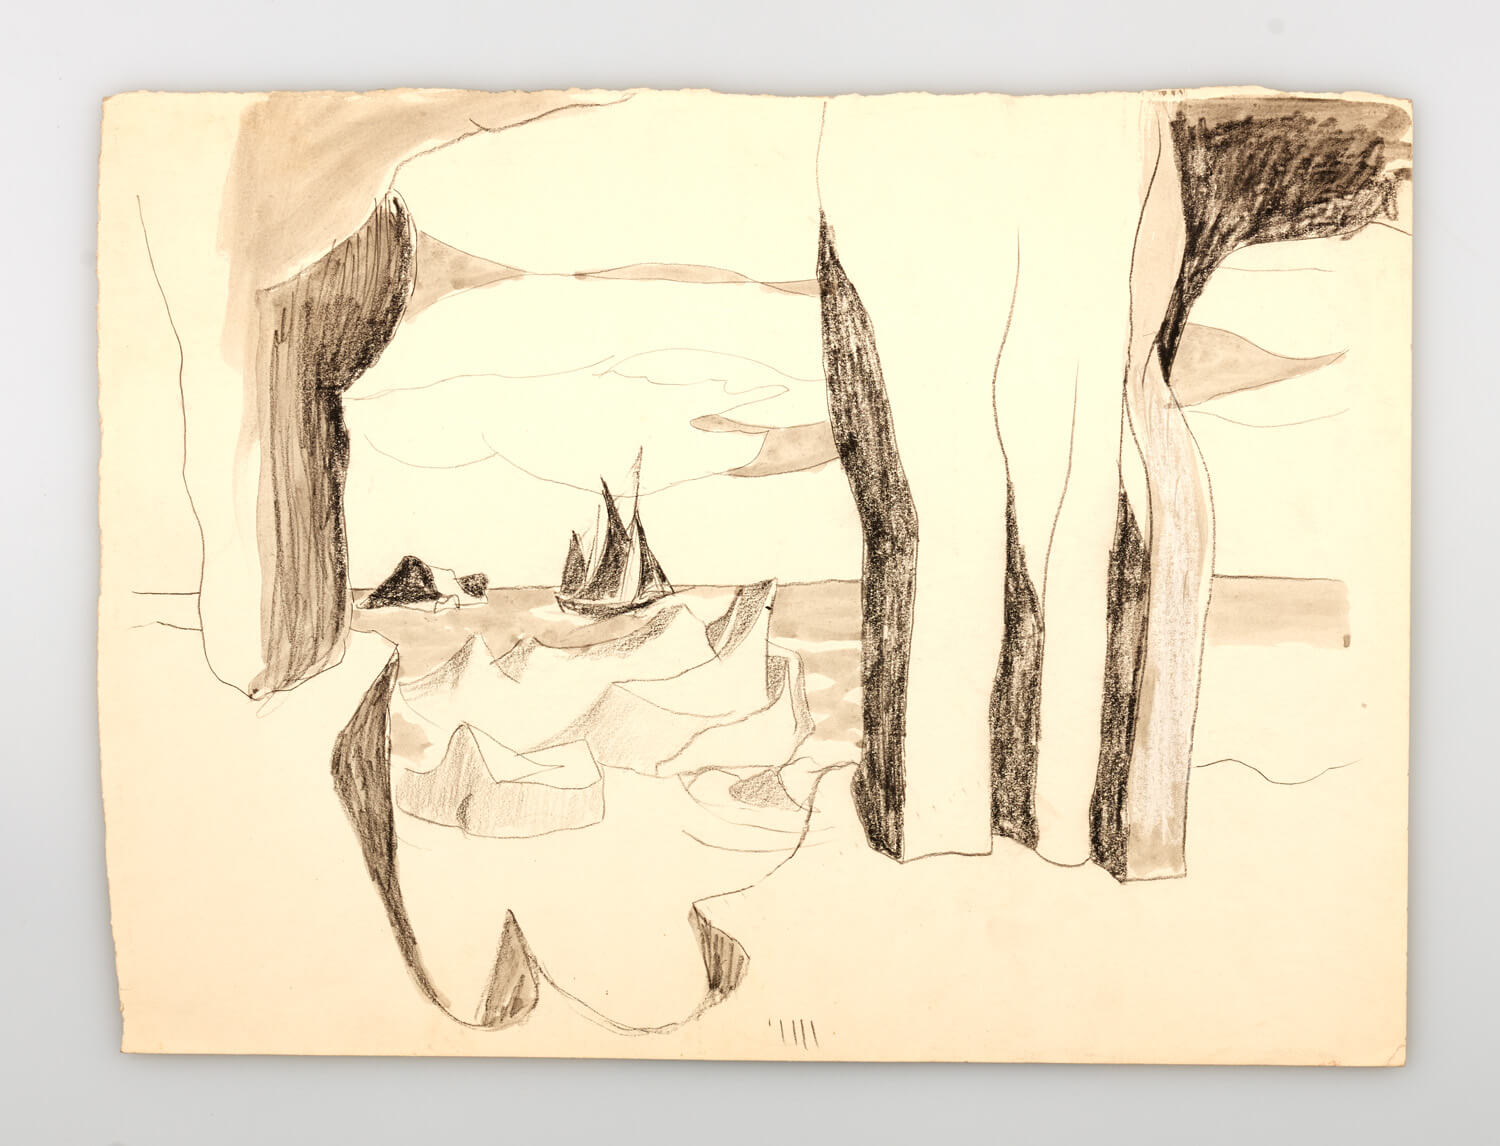 JB262 - Rock and sea, Cornwall sketch - 1946 - 28 x 38 cm - Pencil, conte and watercolour